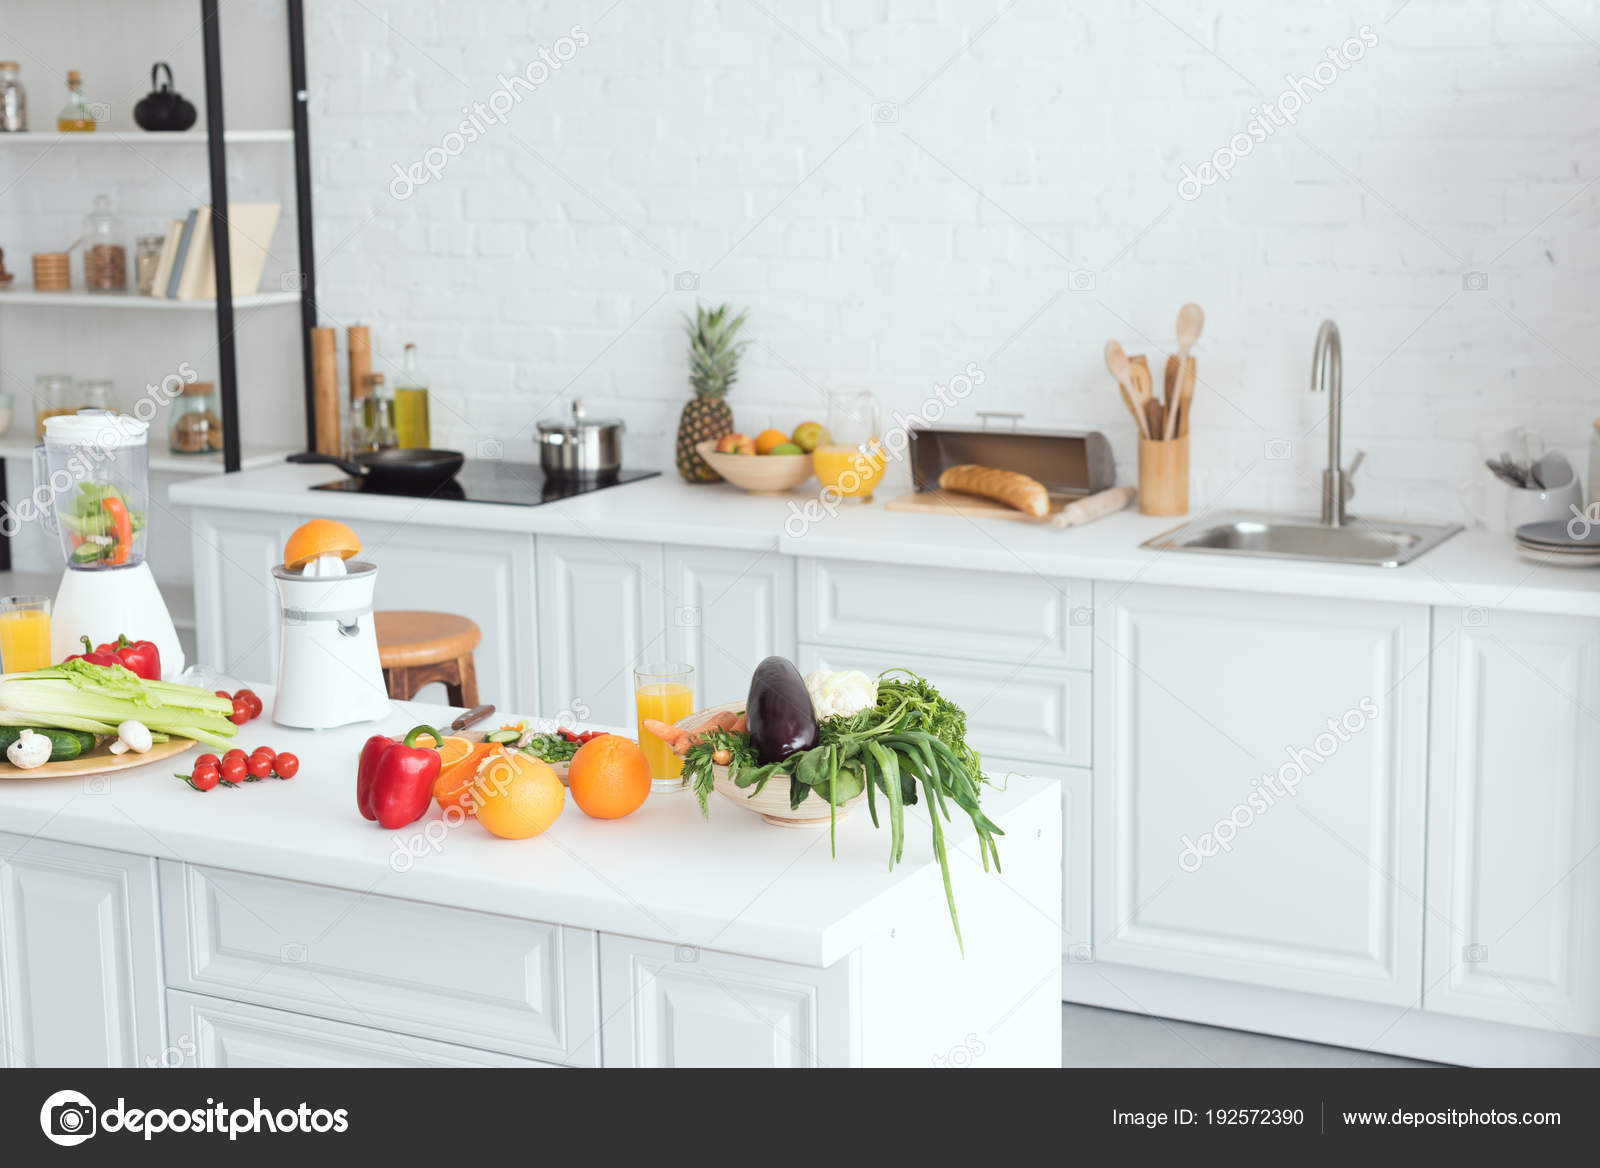 https://st3.depositphotos.com/13194036/19257/i/1600/depositphotos_192572390-stock-photo-interior-white-modern-kitchen-fruits.jpg